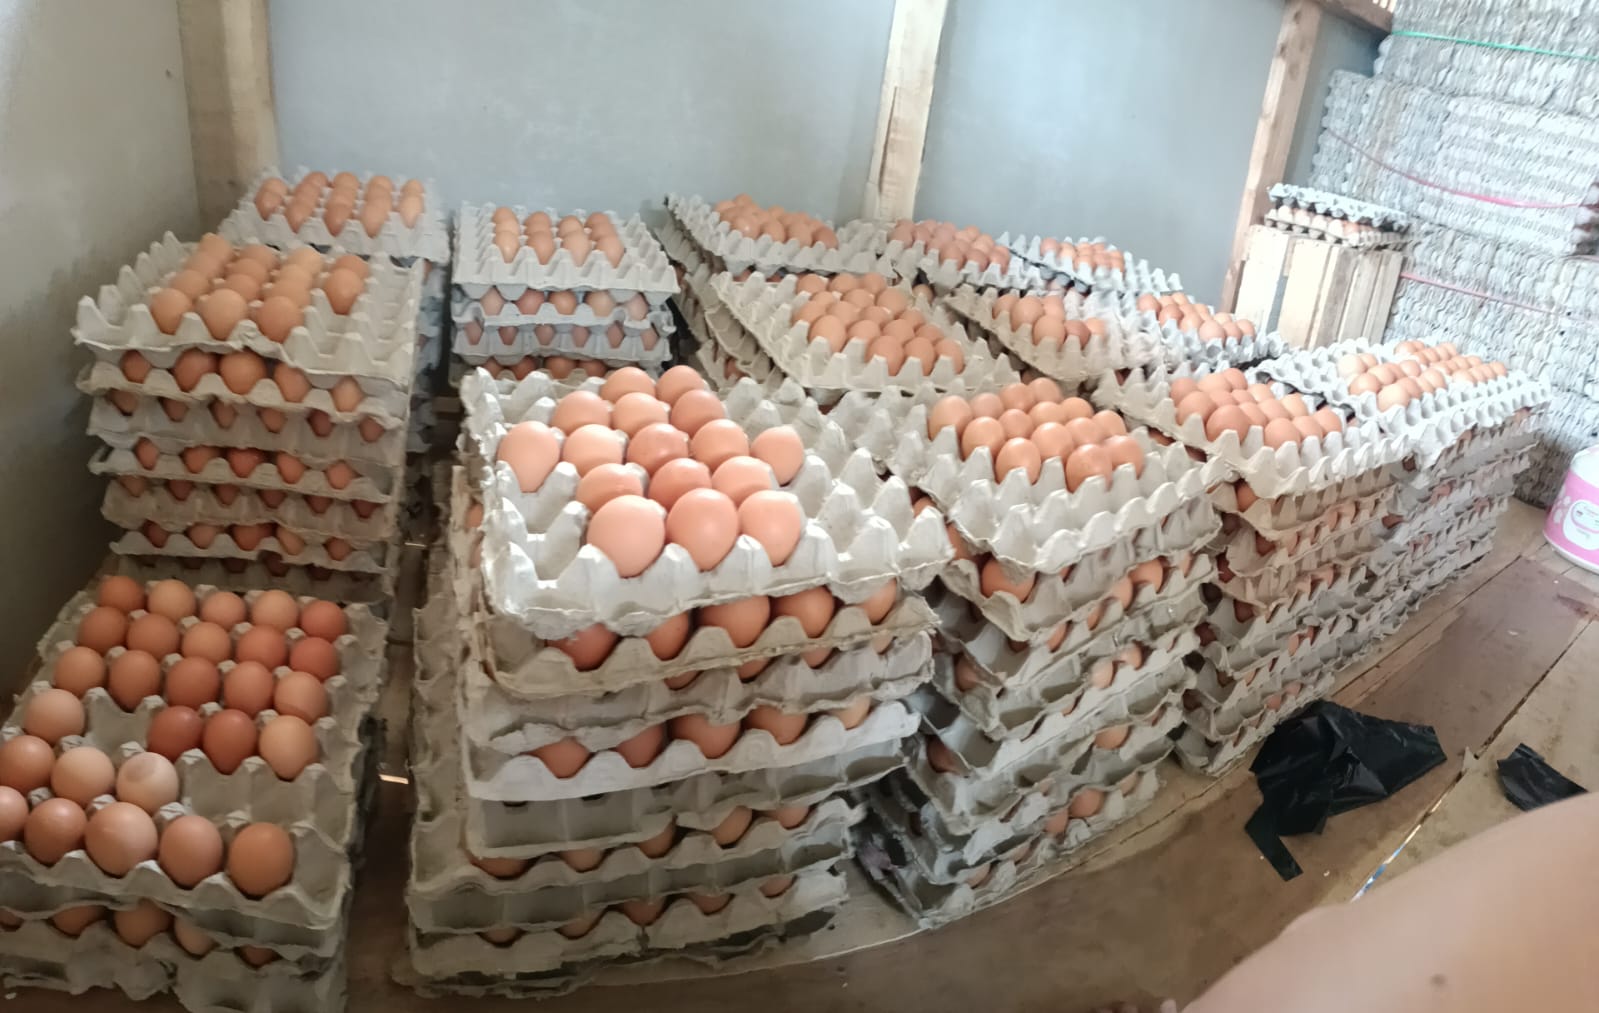 Pengusaha Bangkrut Harga Telur Semrawut Setiap Hari Naik Rp 1000